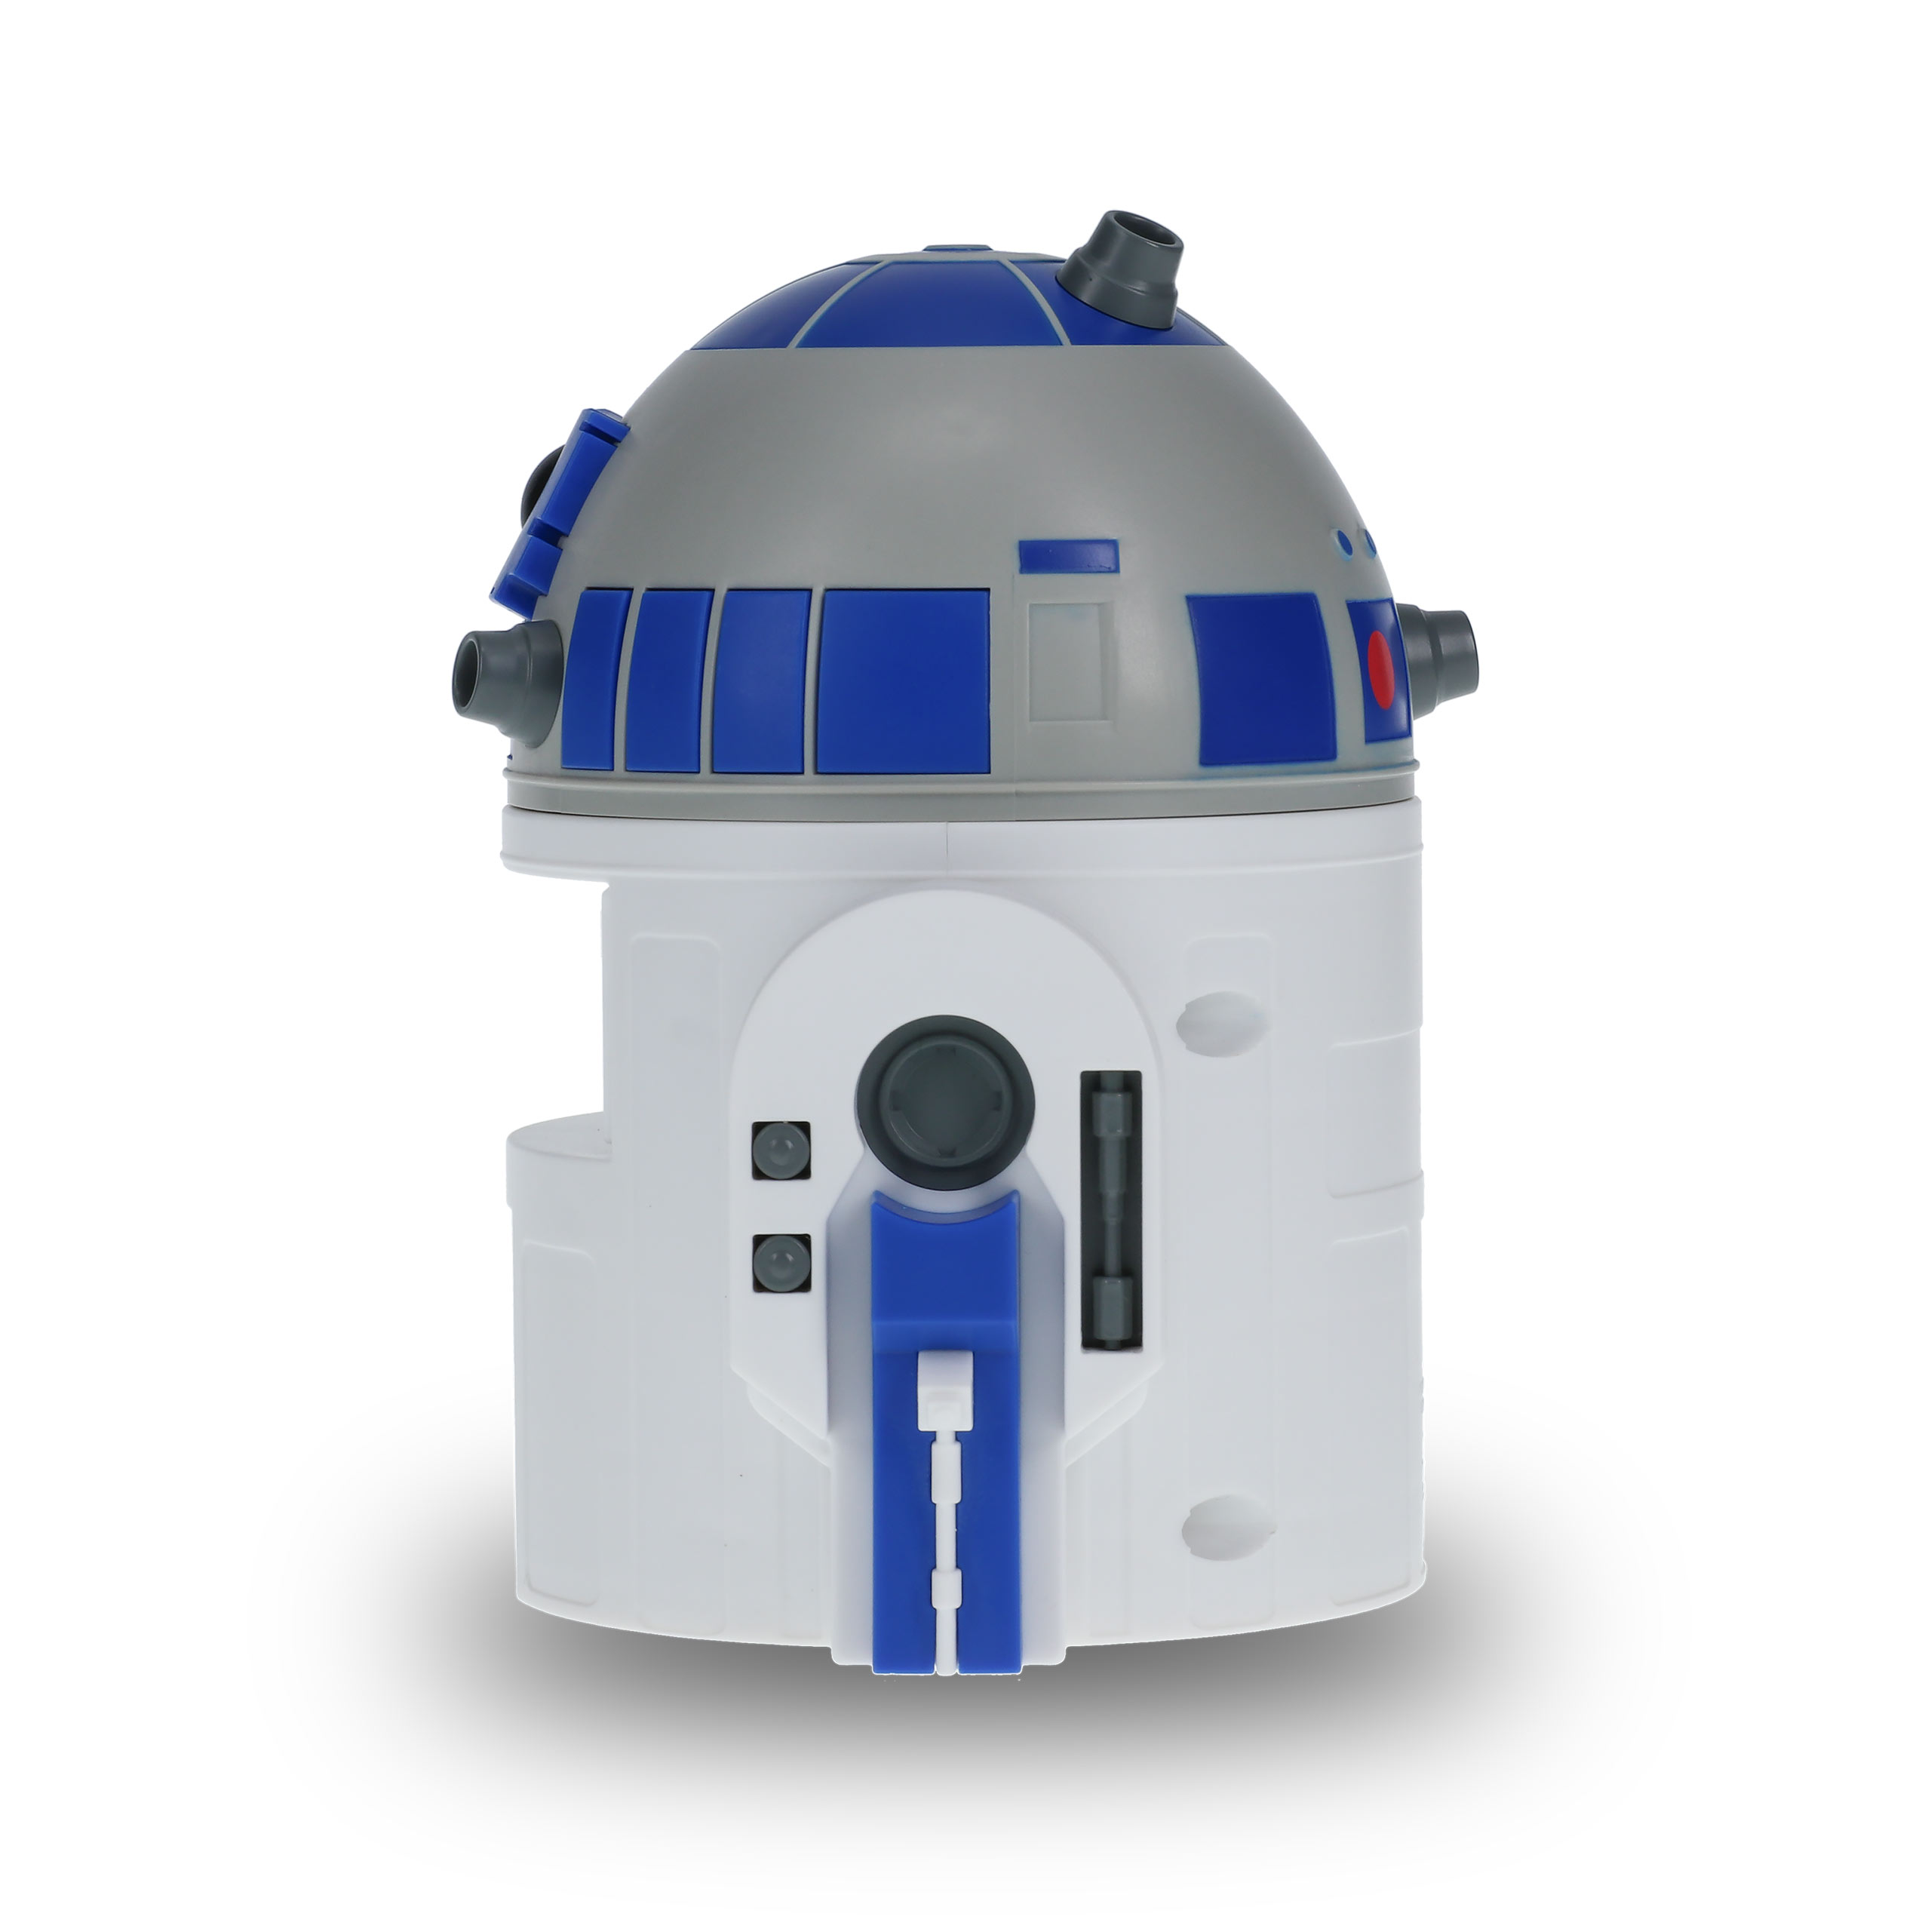 Star Wars - R2-D2 alarm clock